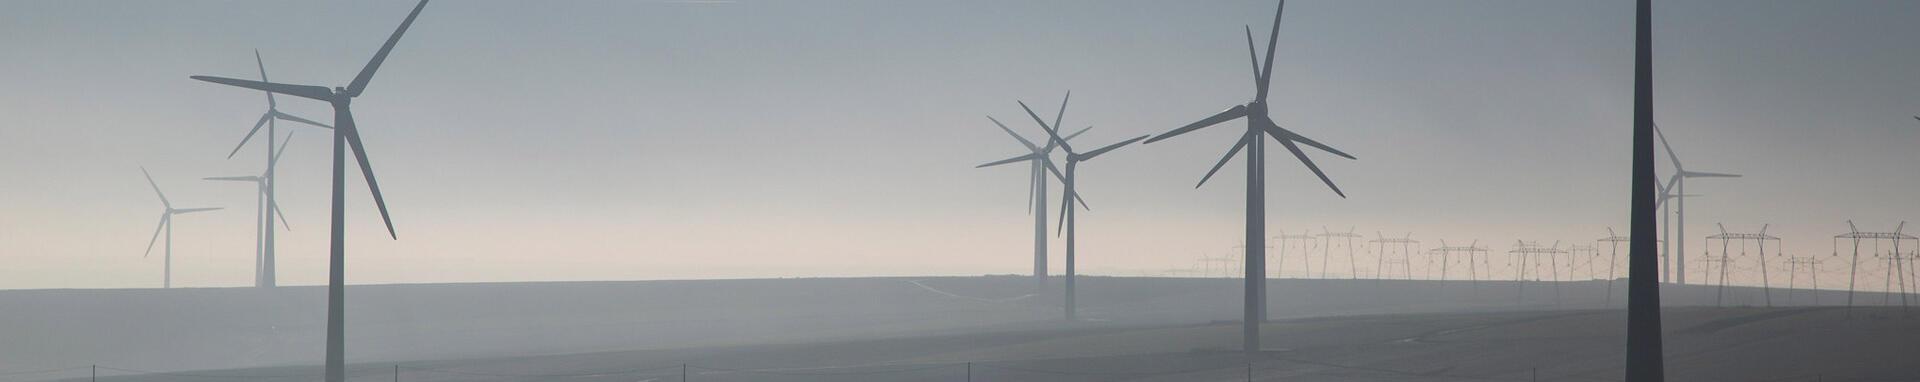 Private Sector Wind Development